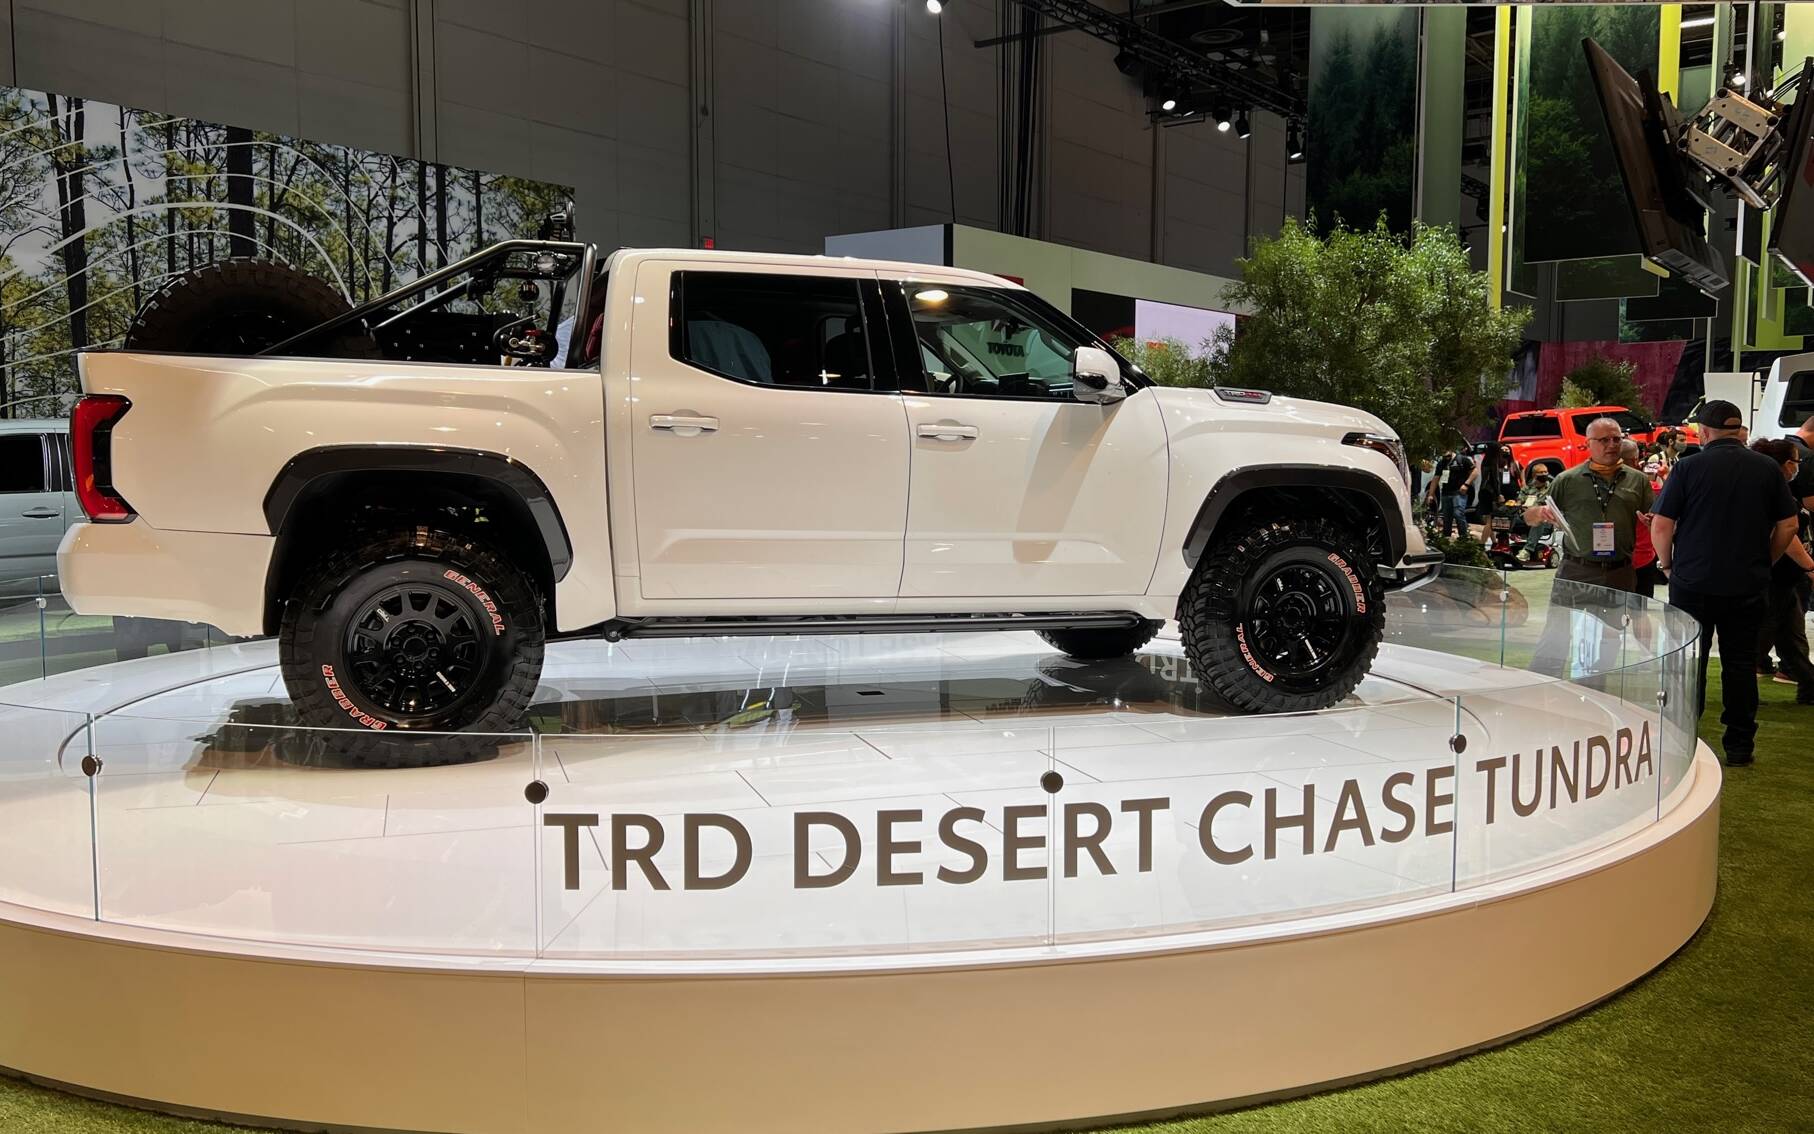 <div class="zjoqD">TRD Desert Chase Toyota Tundra</div>